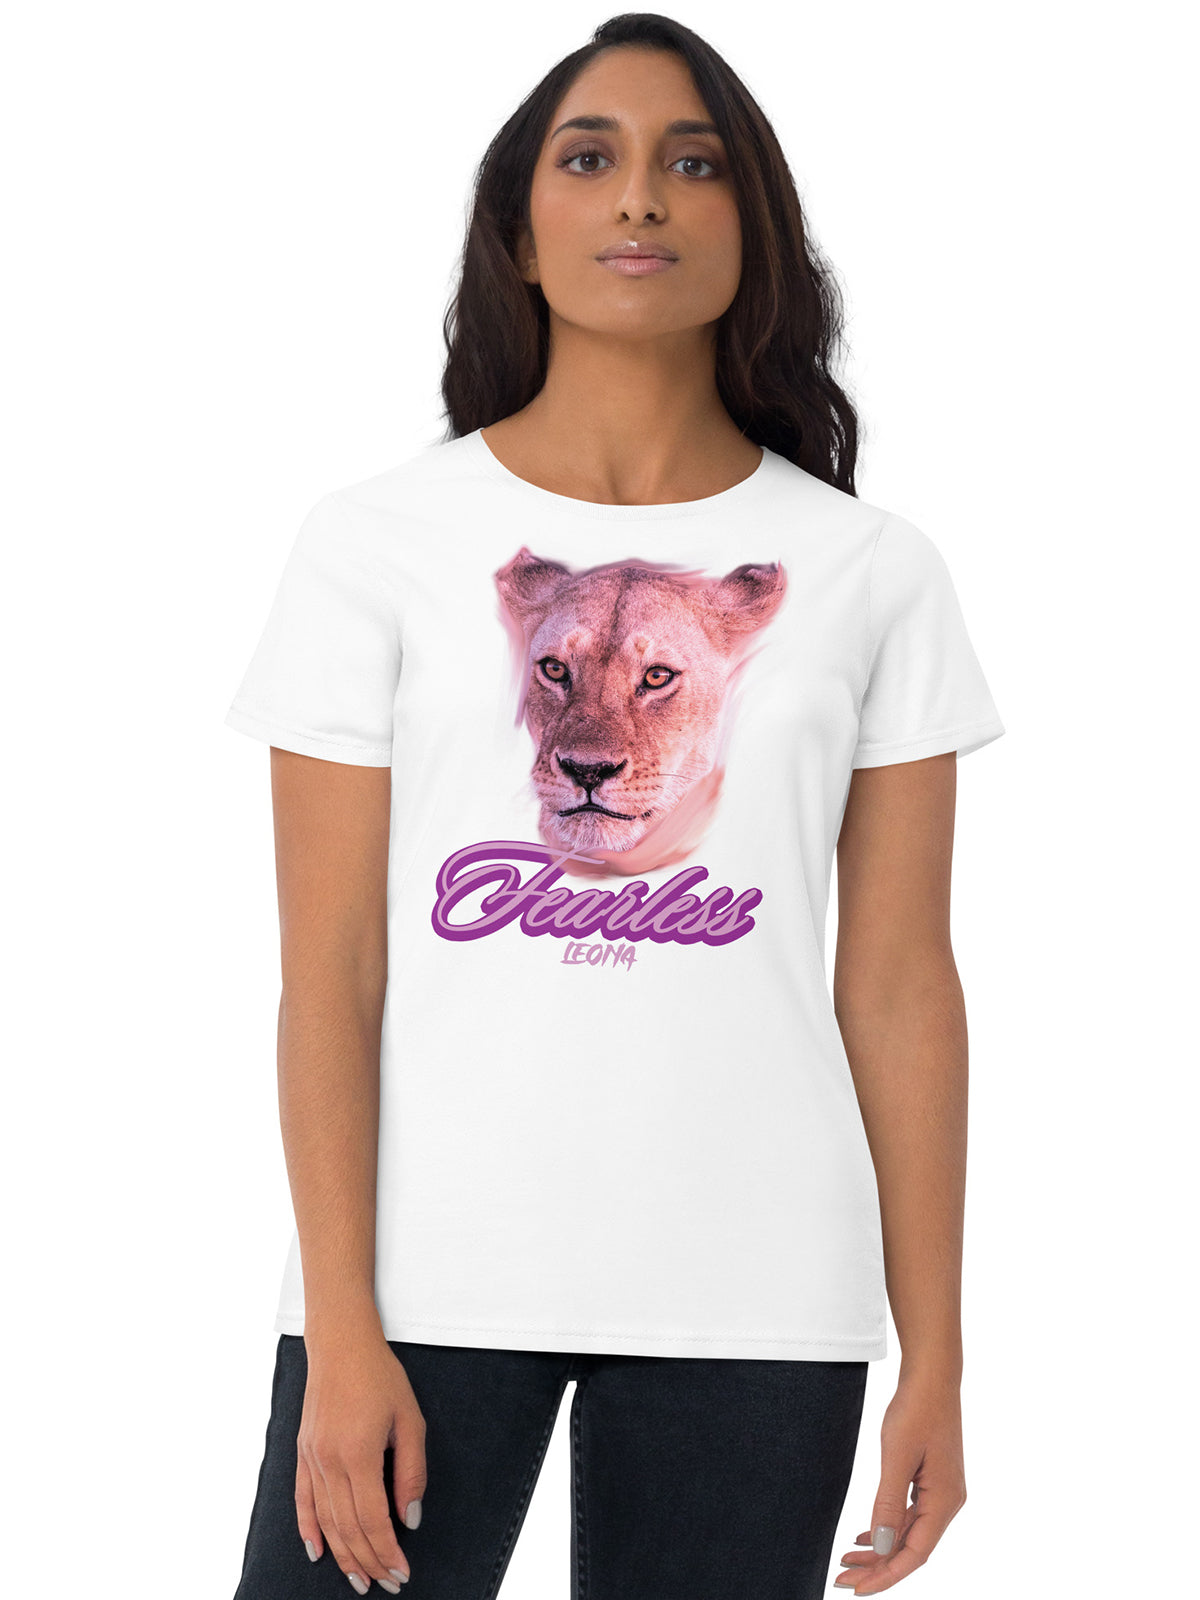 Fearless Leona T-shirt